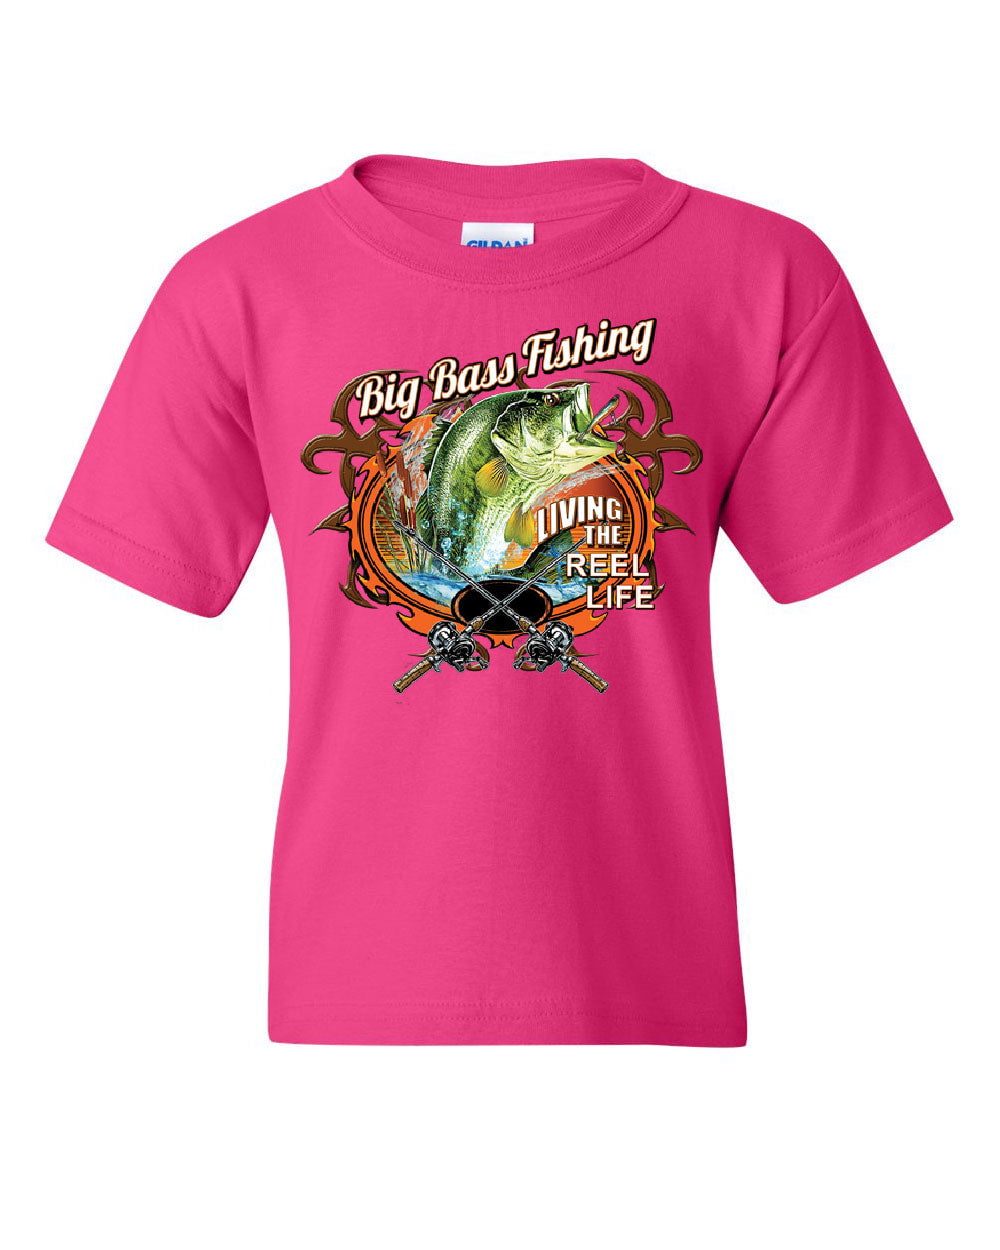 Tee Hunt Big Bass Fishing Youth T-Shirt Living The Reel Life Fisherman  Spinning Kids Tee, Pink, Small 